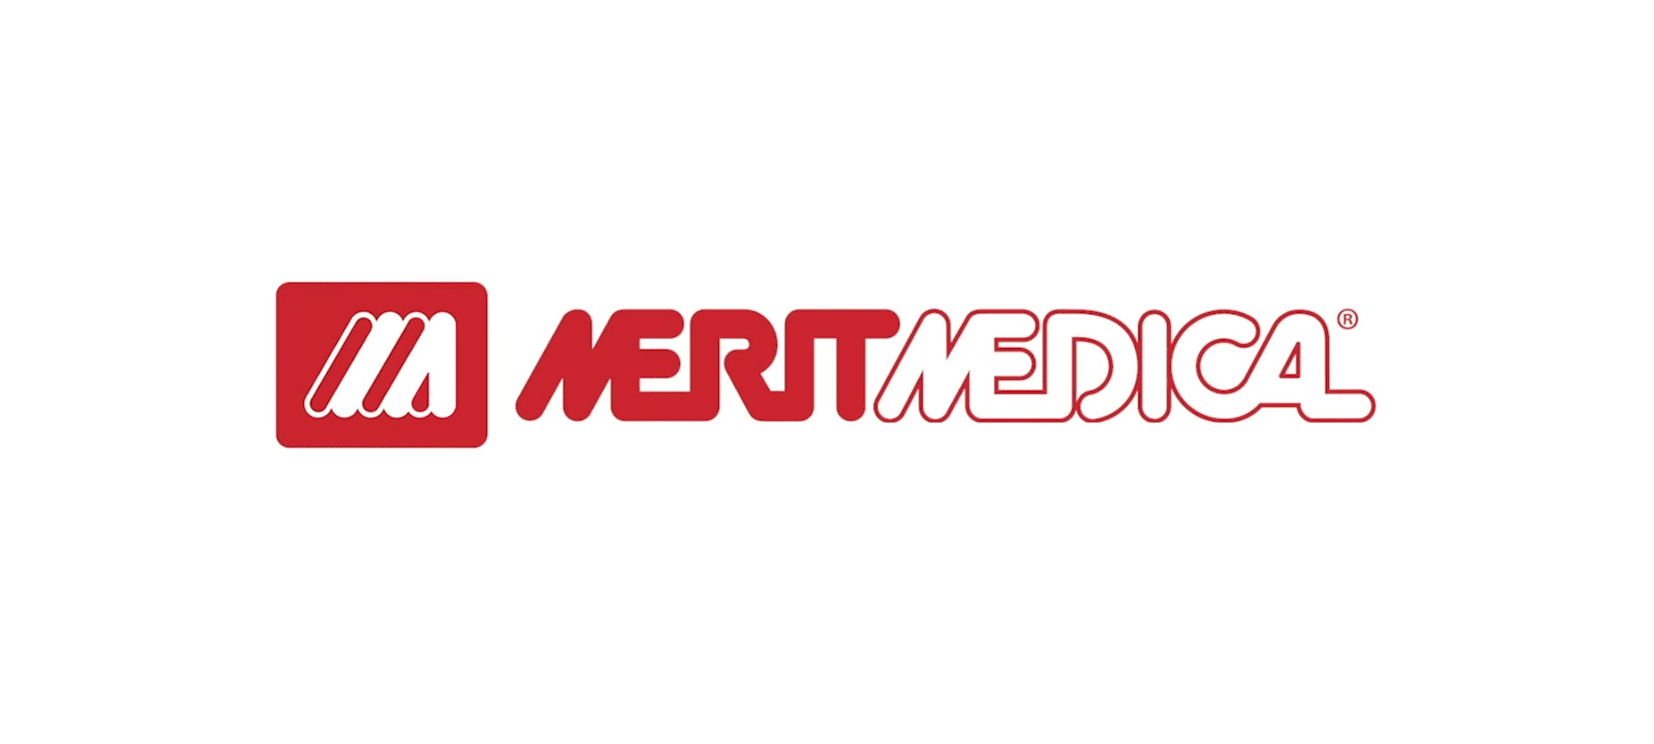 Merit logo